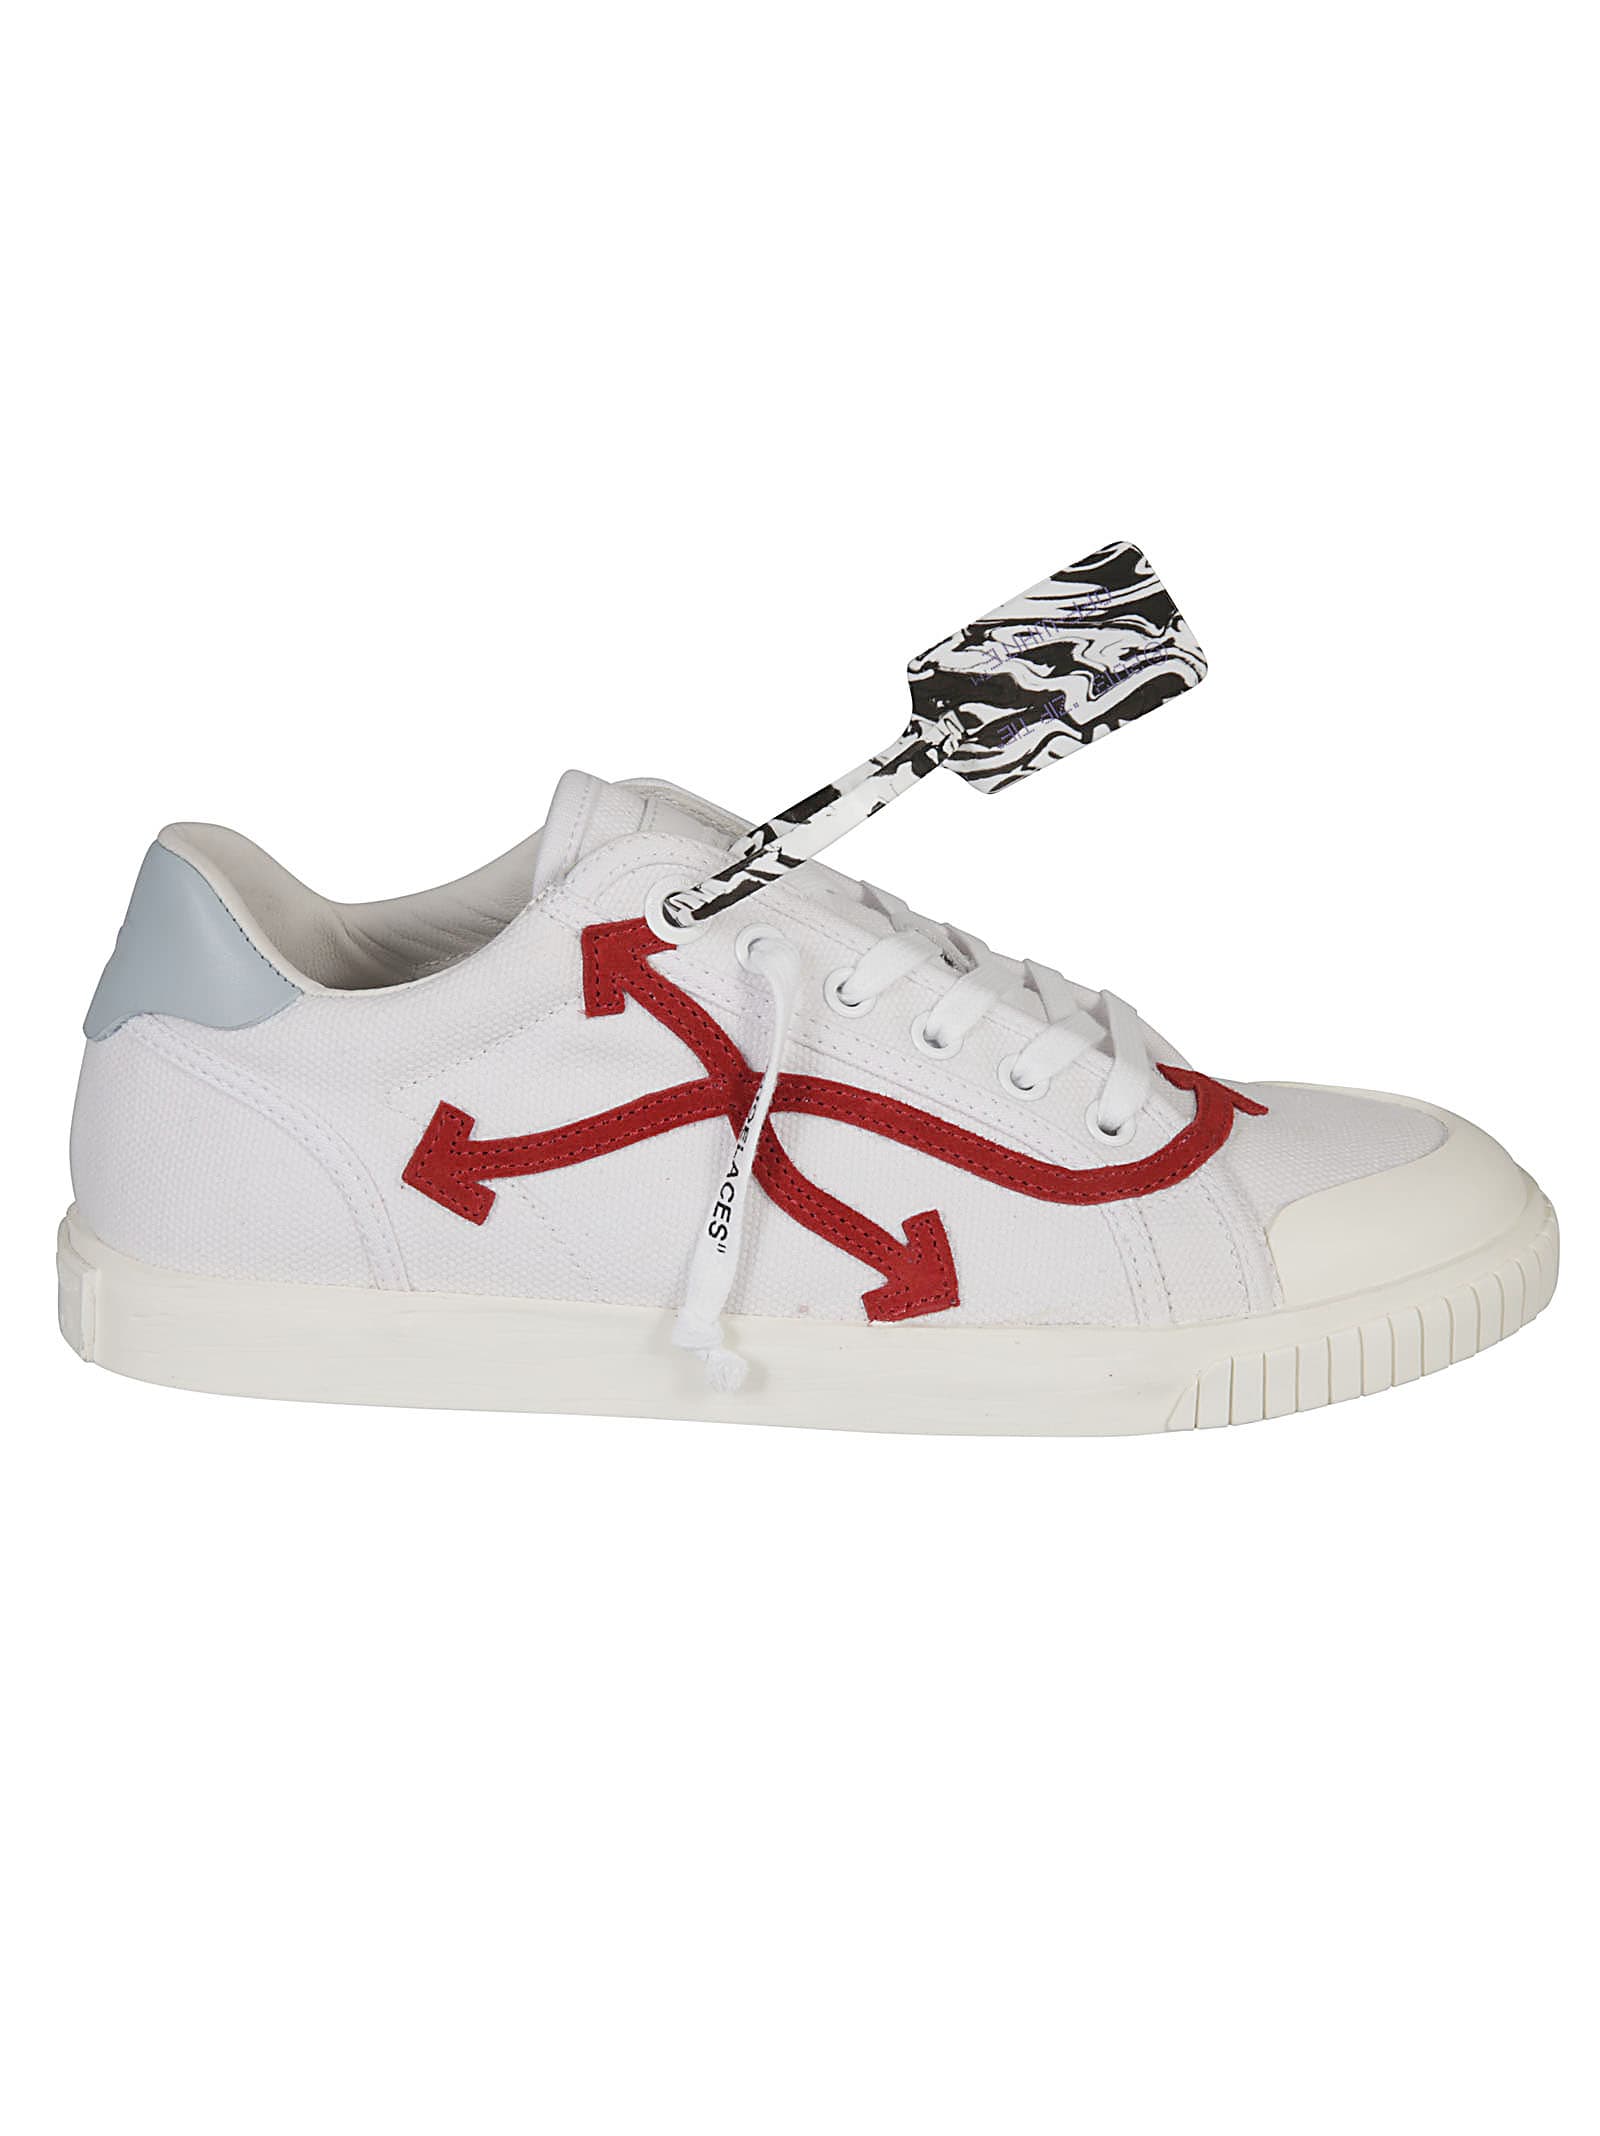 Off-White Melt Arrow Vulcanized Sneakers